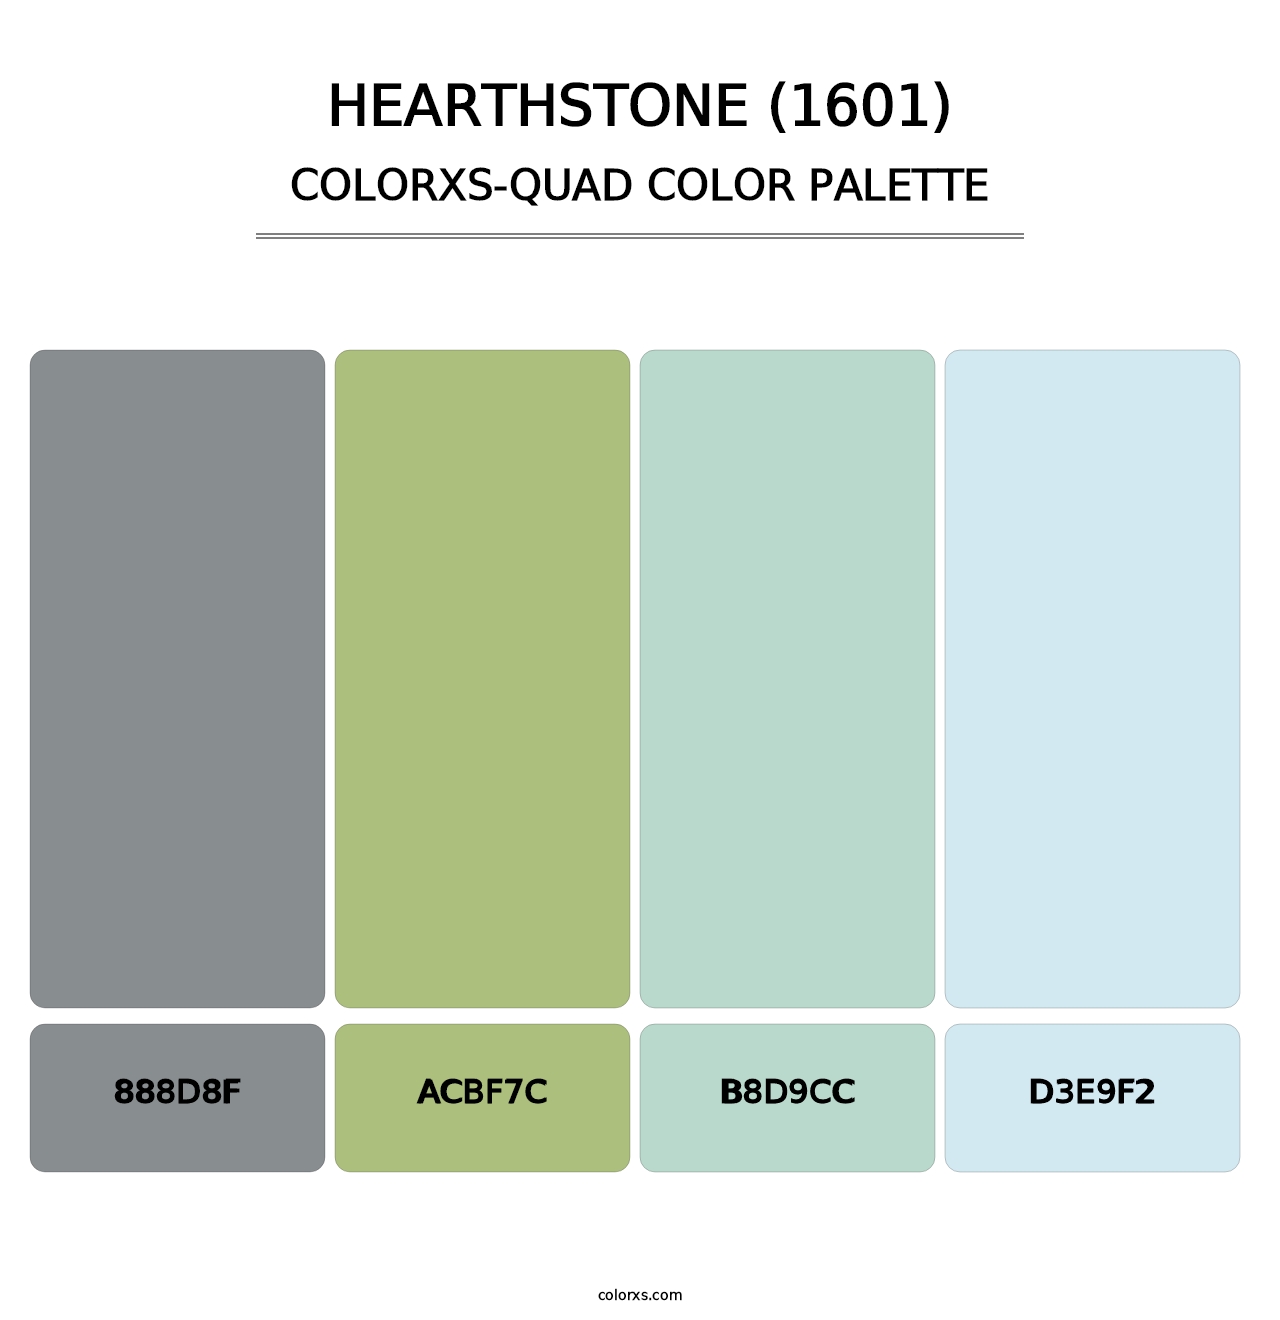 Hearthstone (1601) - Colorxs Quad Palette